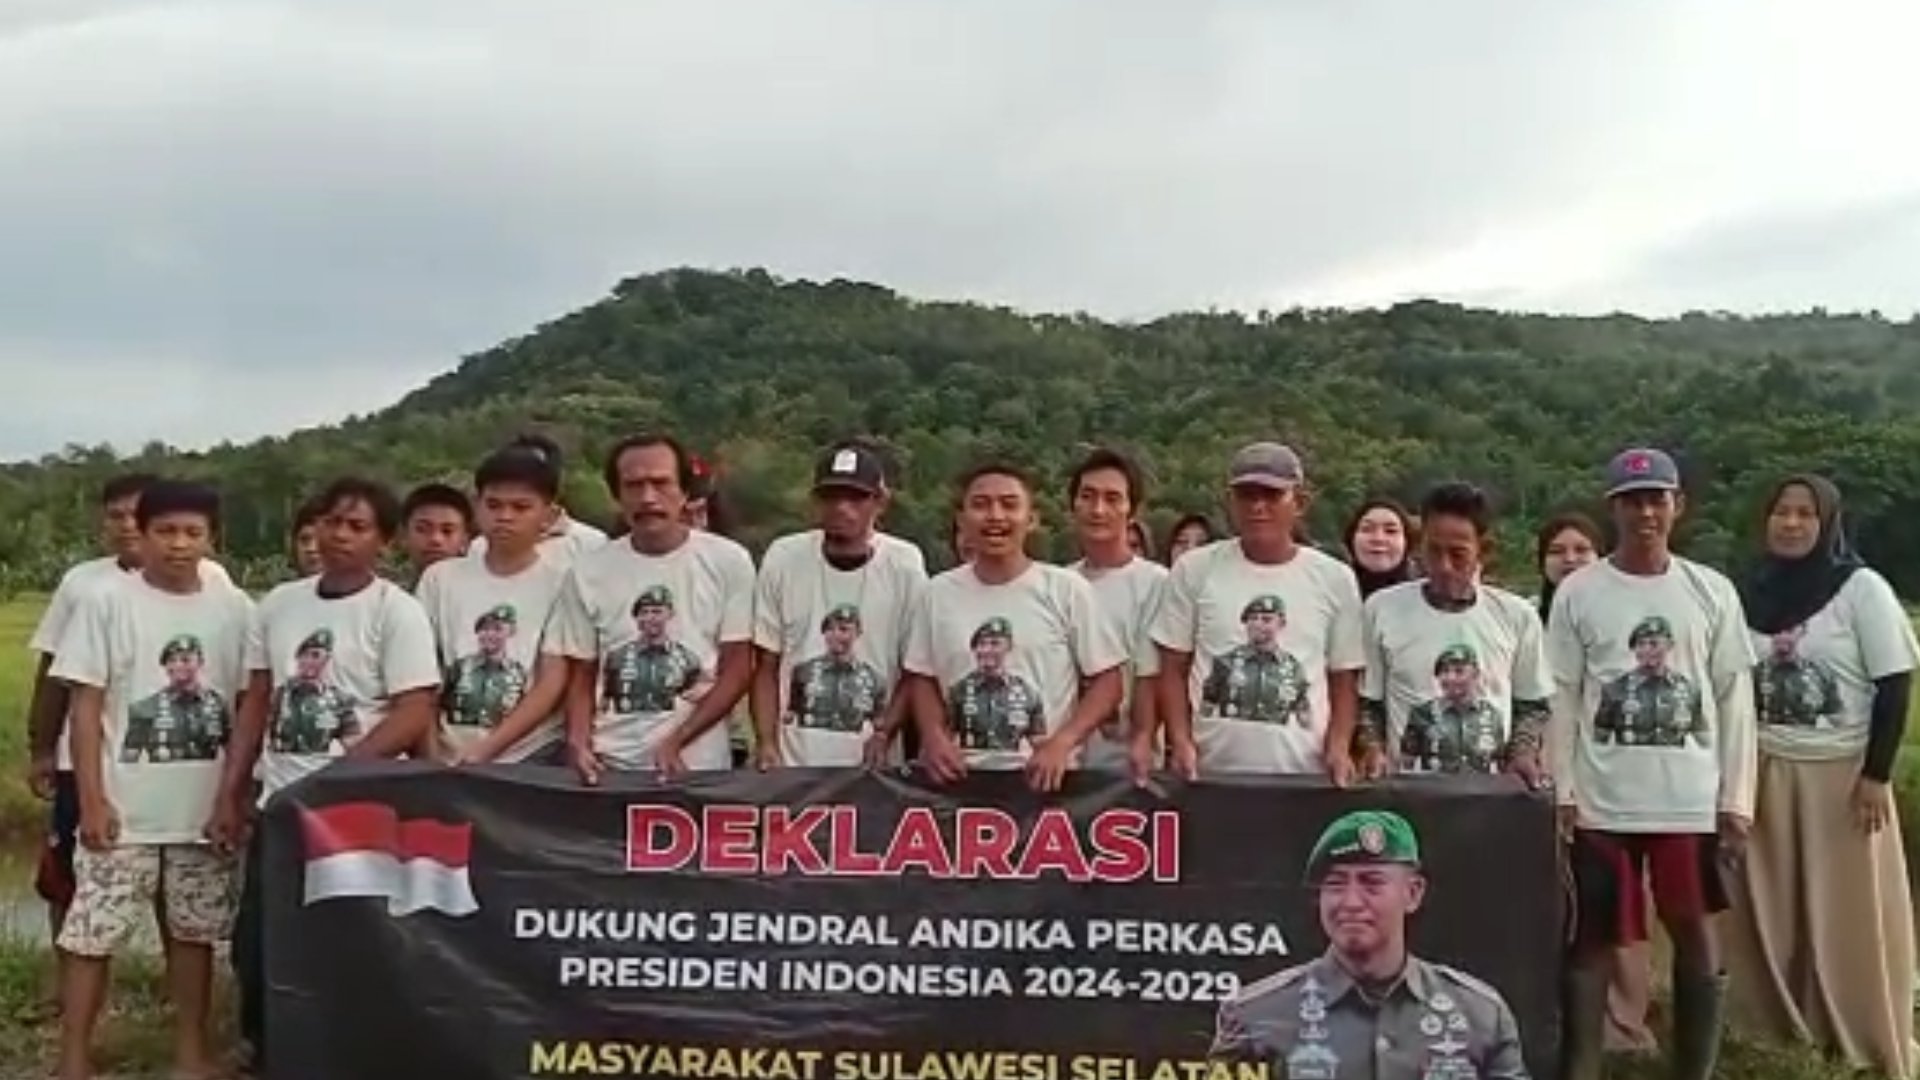 Masyarakat Sulawesi Selatan Tergabung di “MATA” Deklarasikan Dukungan kepada Jenderal Andika Perkasa sebagai Capres 2025